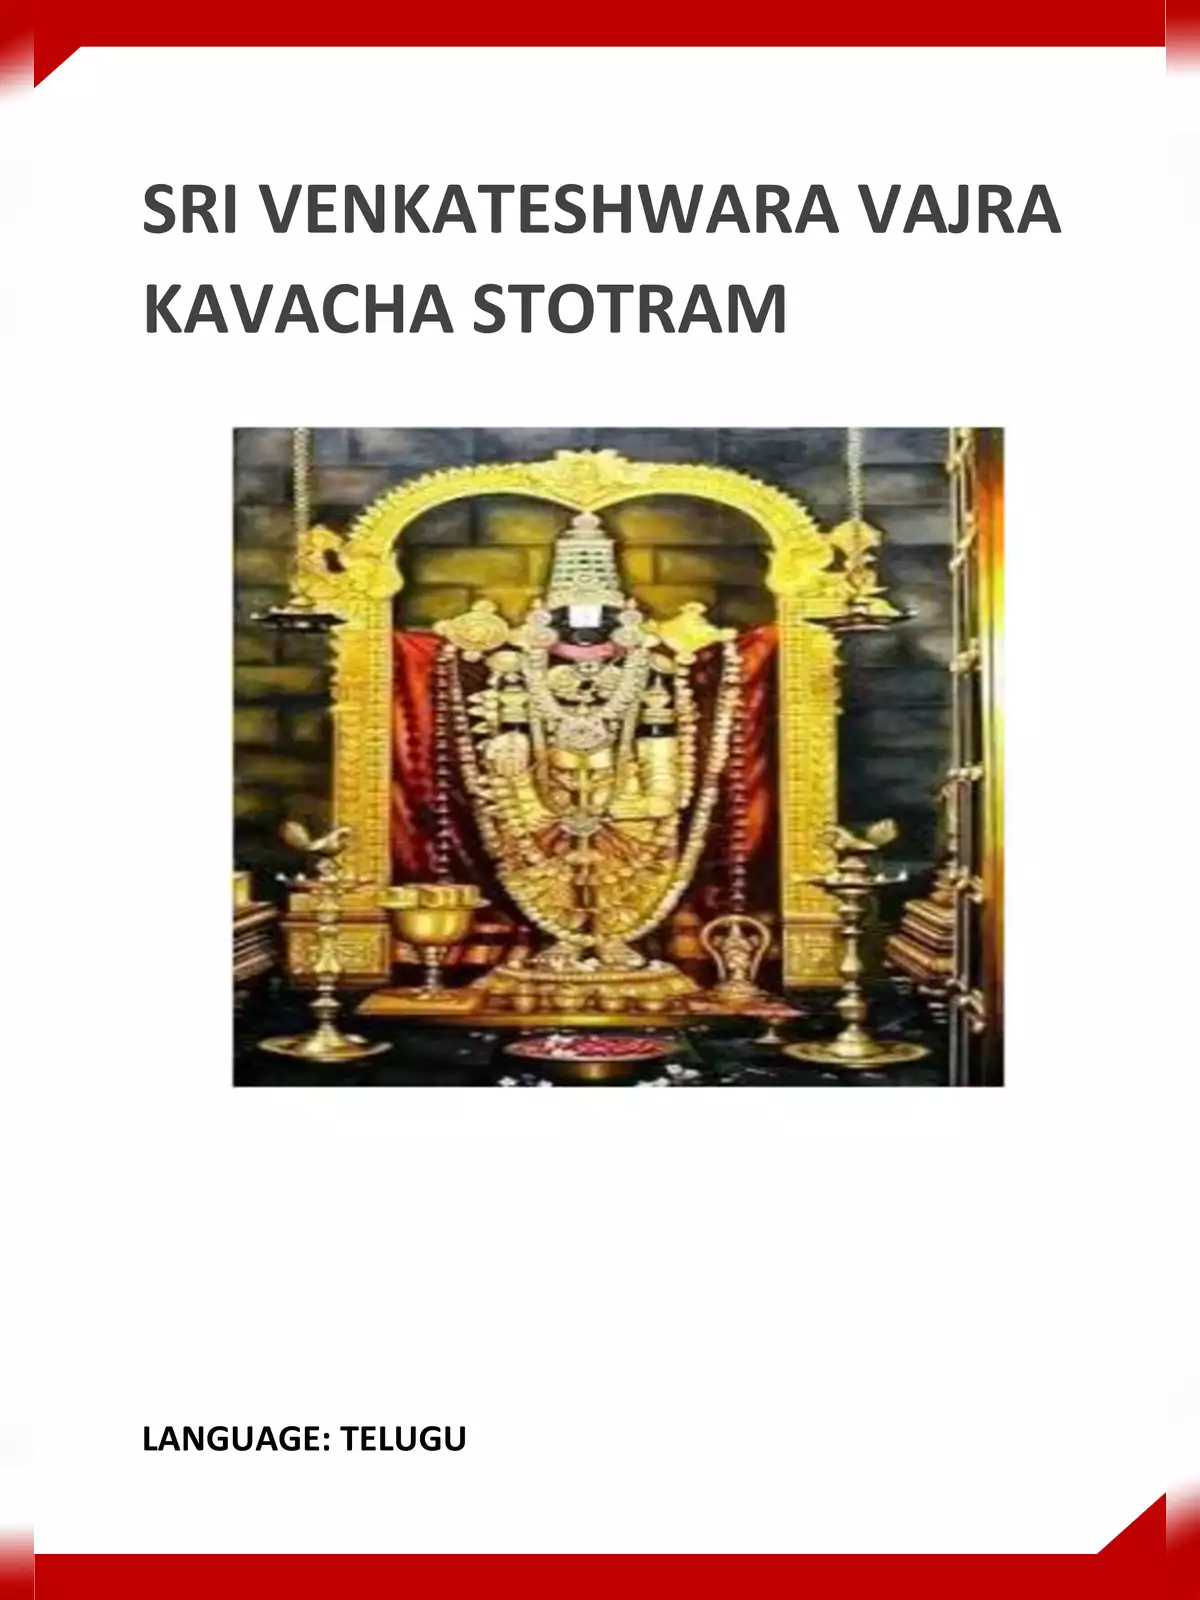 Sri Venkateshwara Vajra Kavacha Stotram